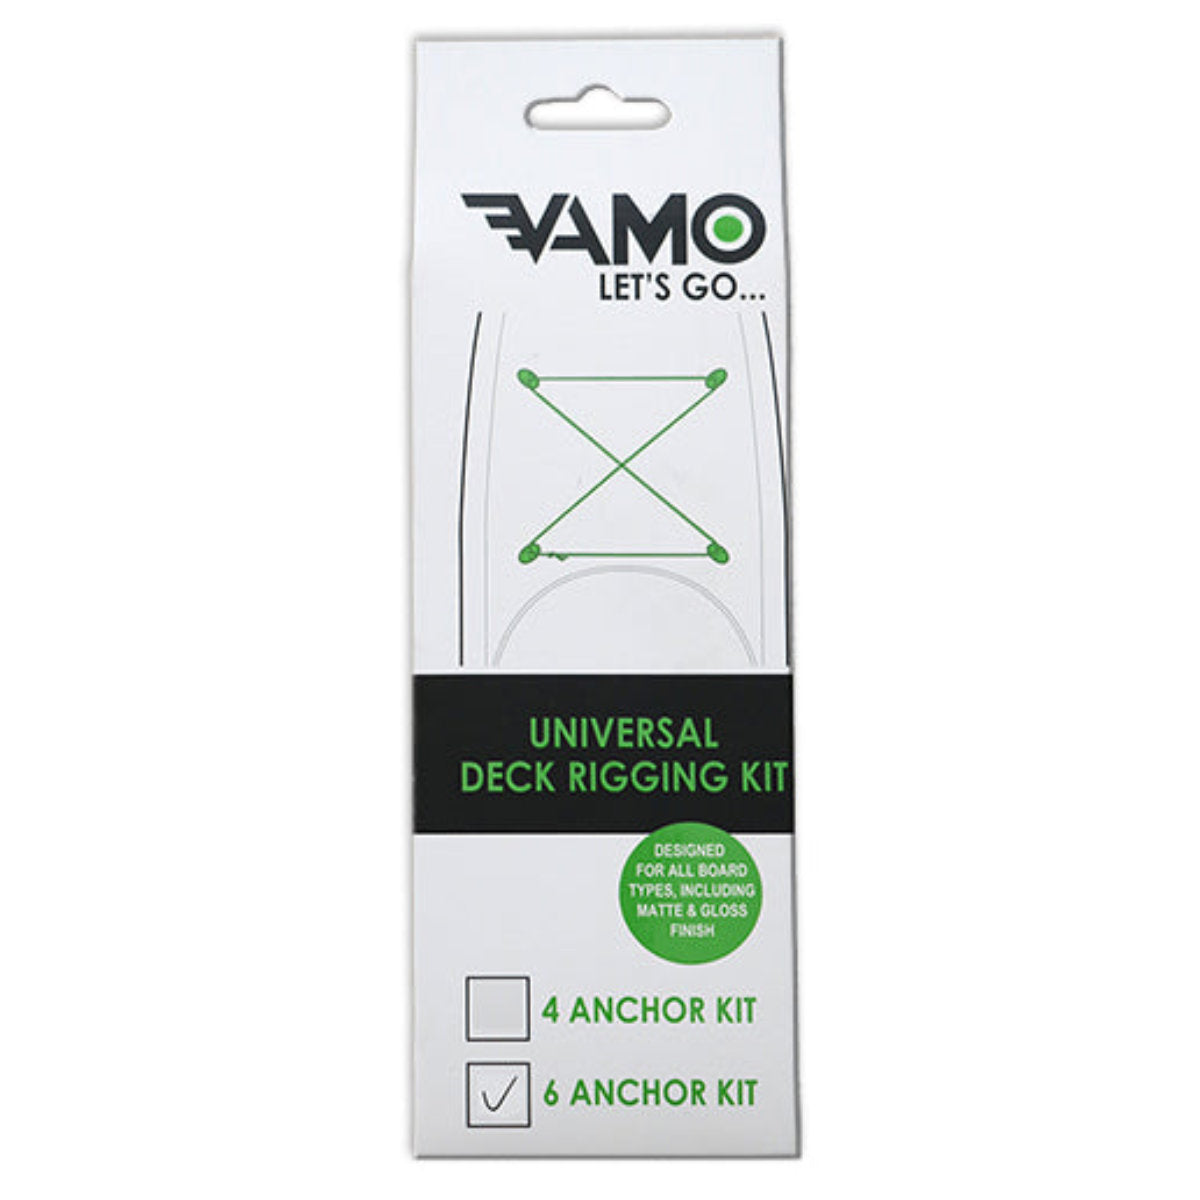 
                  
                    Deck Rigging Kit - Vamo Universal Deck Rigging Kit - 6 Anchor Kit
                  
                